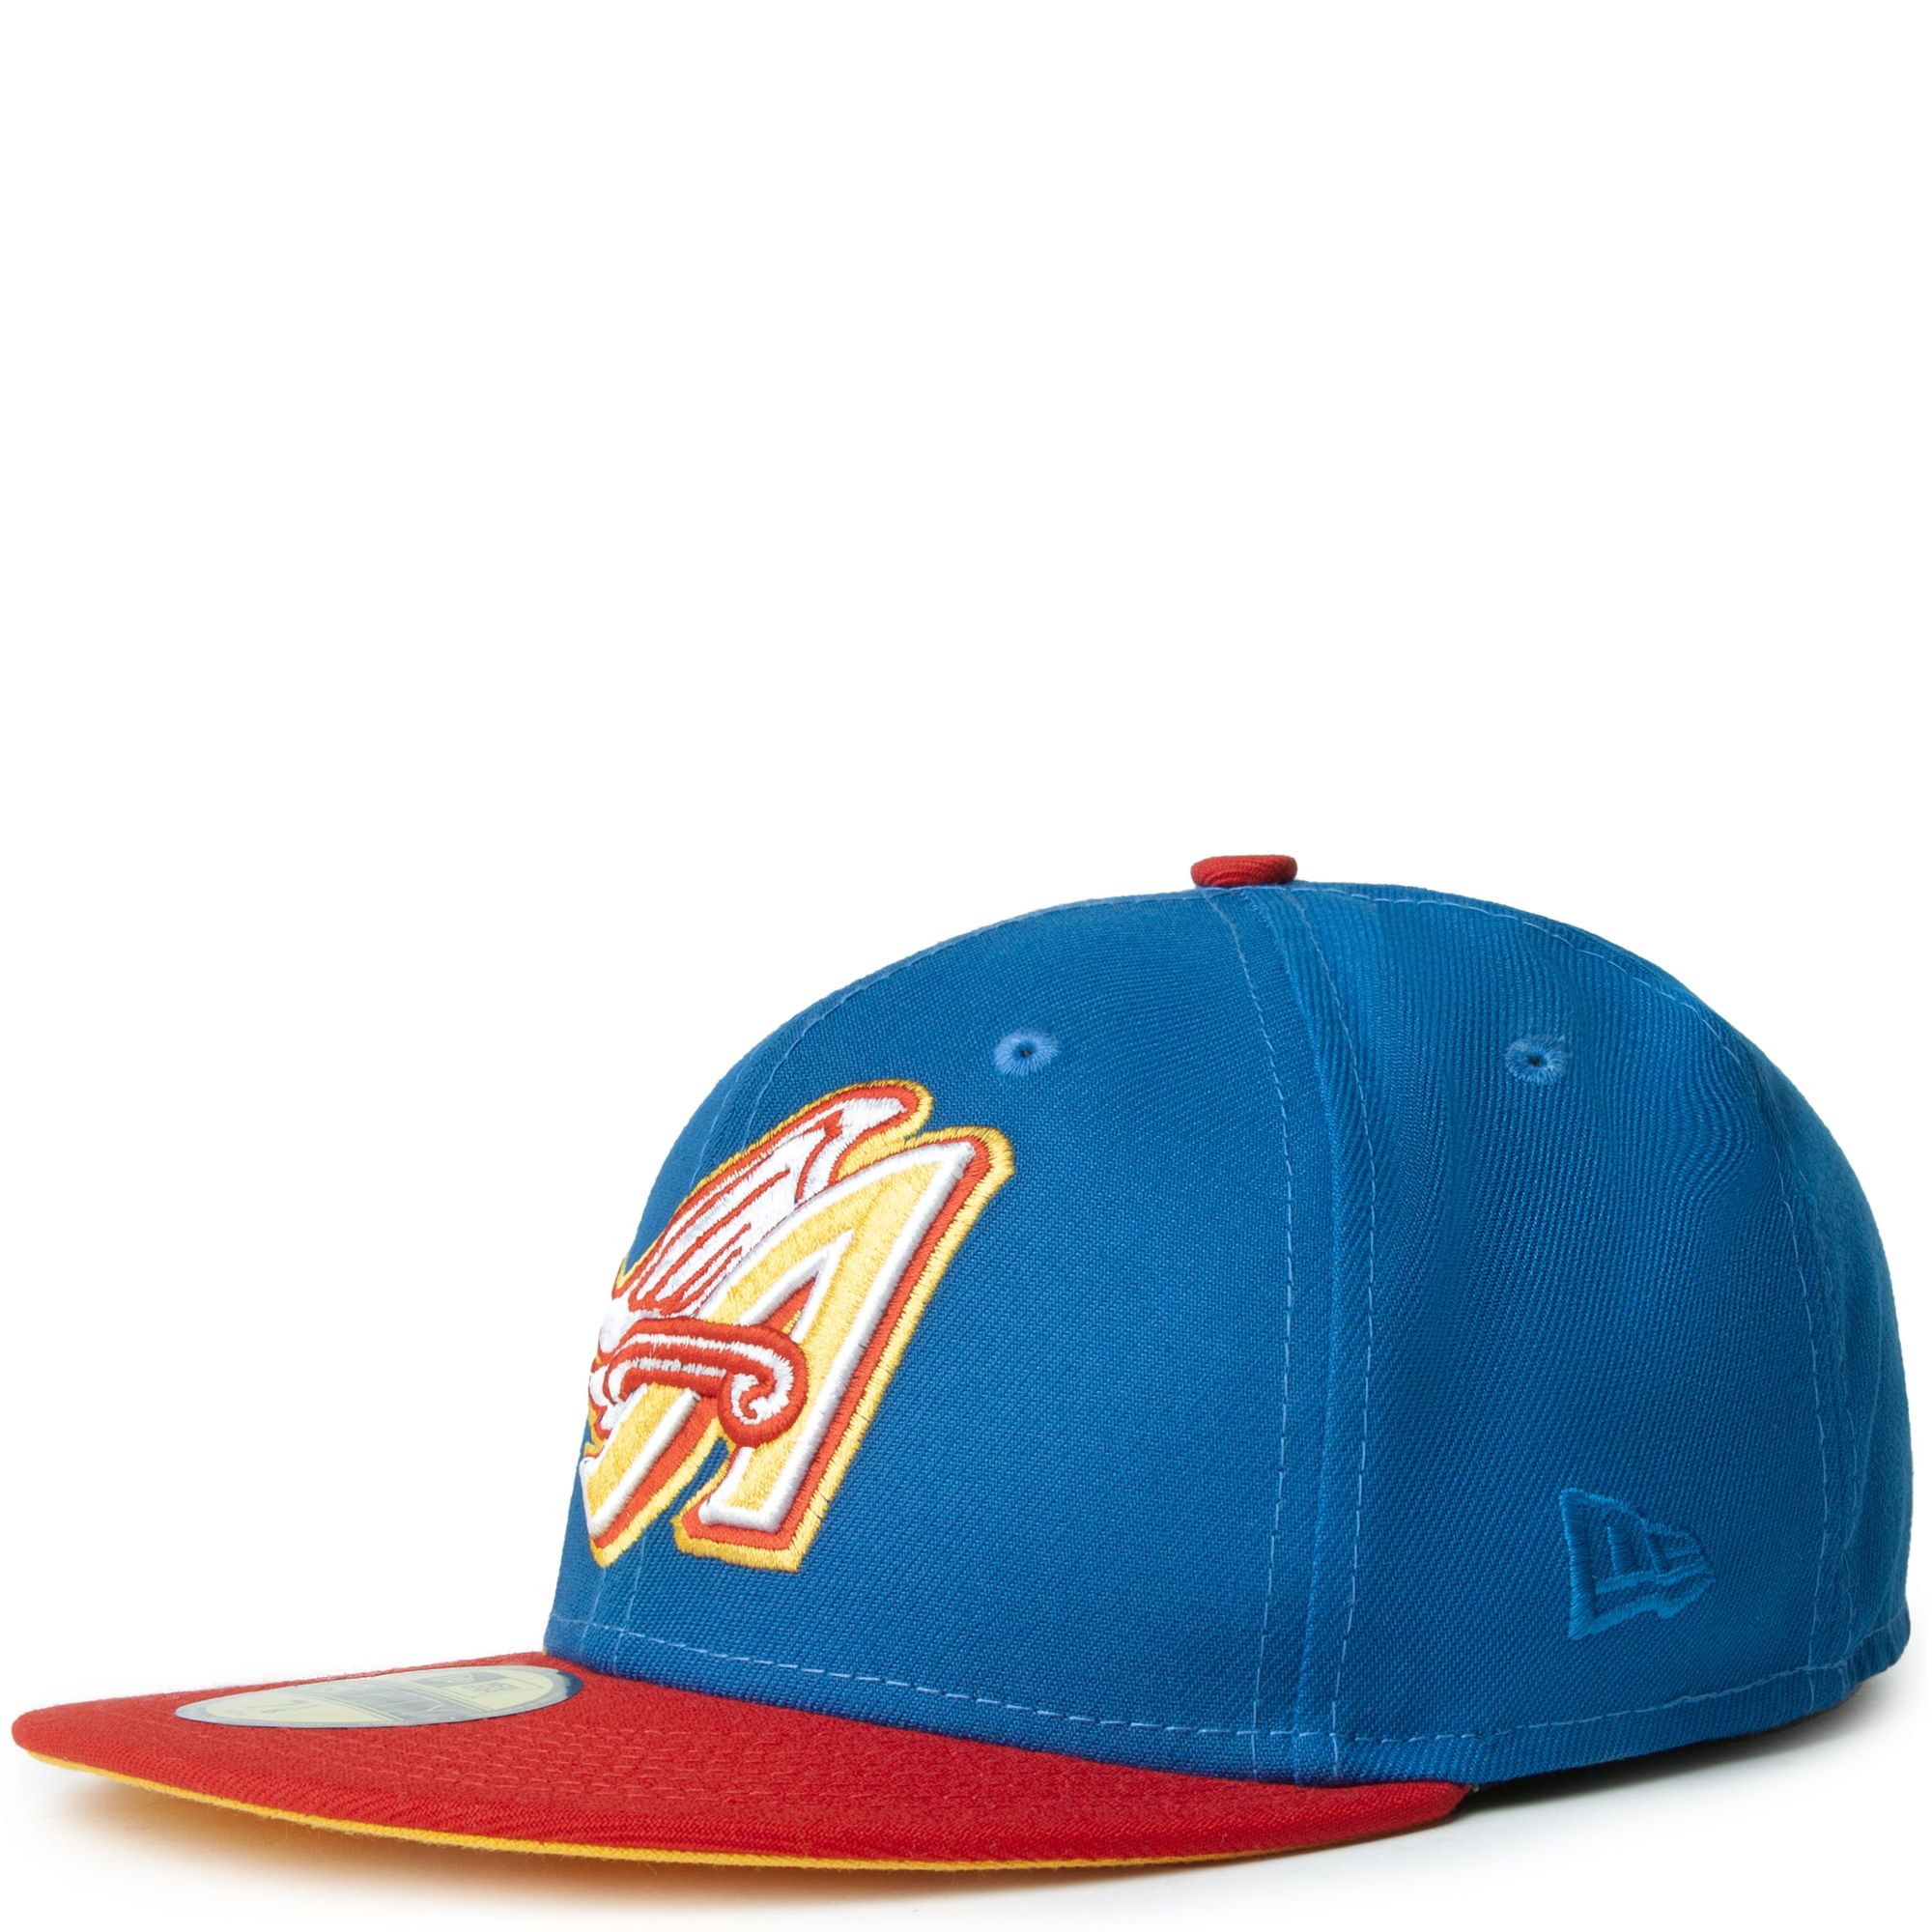 MLB ANGELS NEW ERA CAP BABY BLUE RED 7 5/8 HATCLUB STYLE